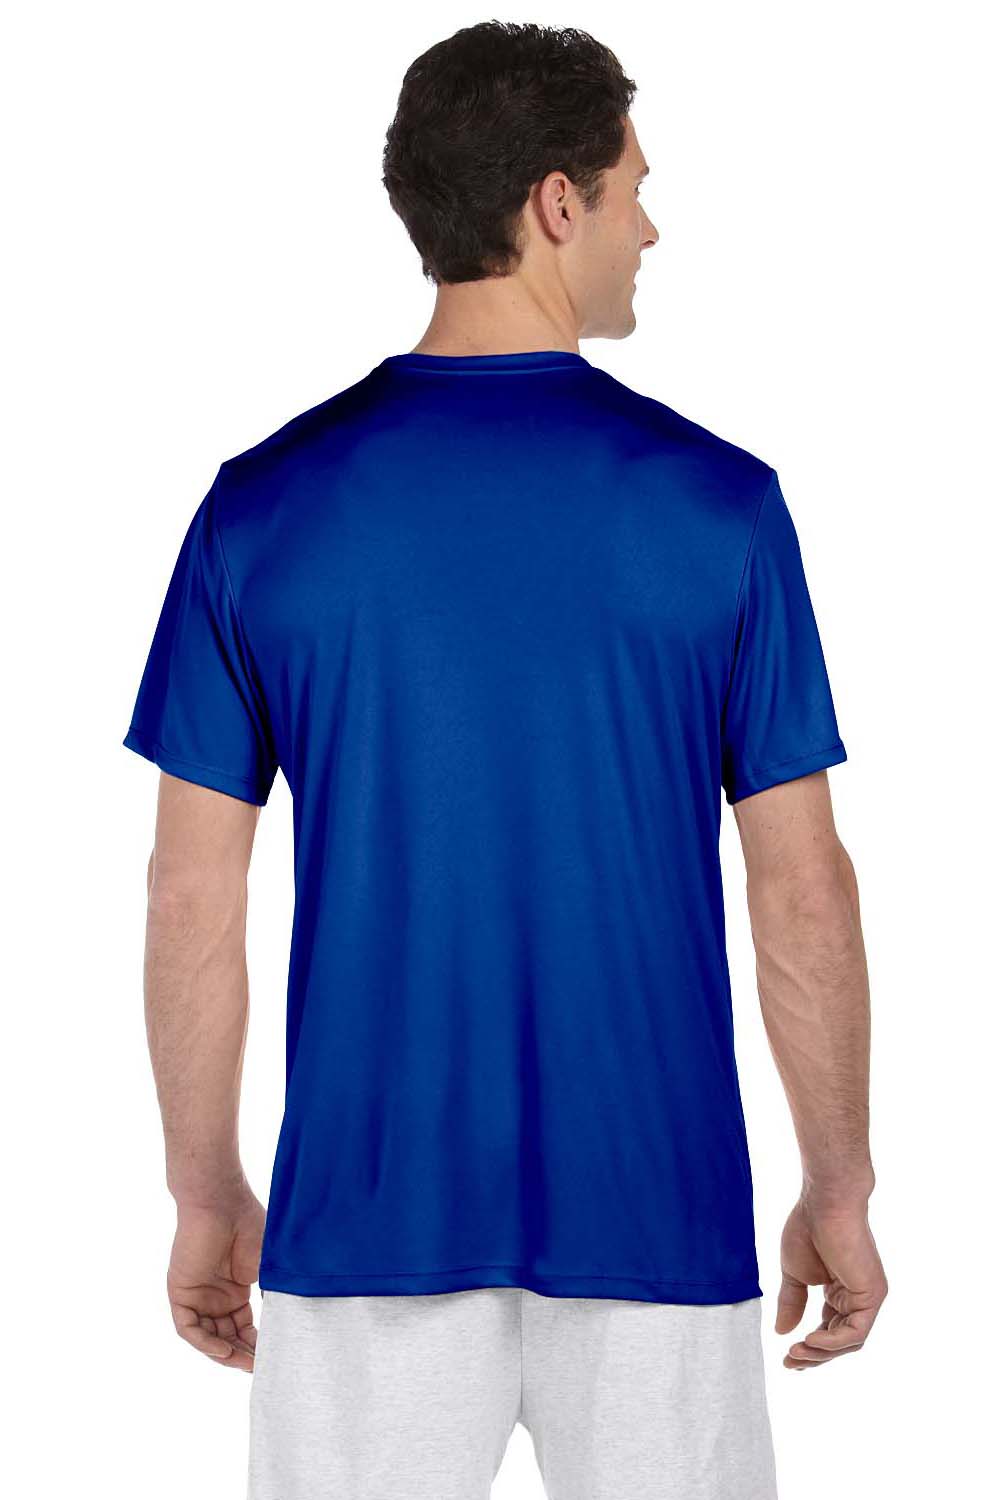 Hanes 4820 Mens Cool DRI FreshIQ Moisture Wicking Short Sleeve Crewneck T-Shirt Royal Blue Back